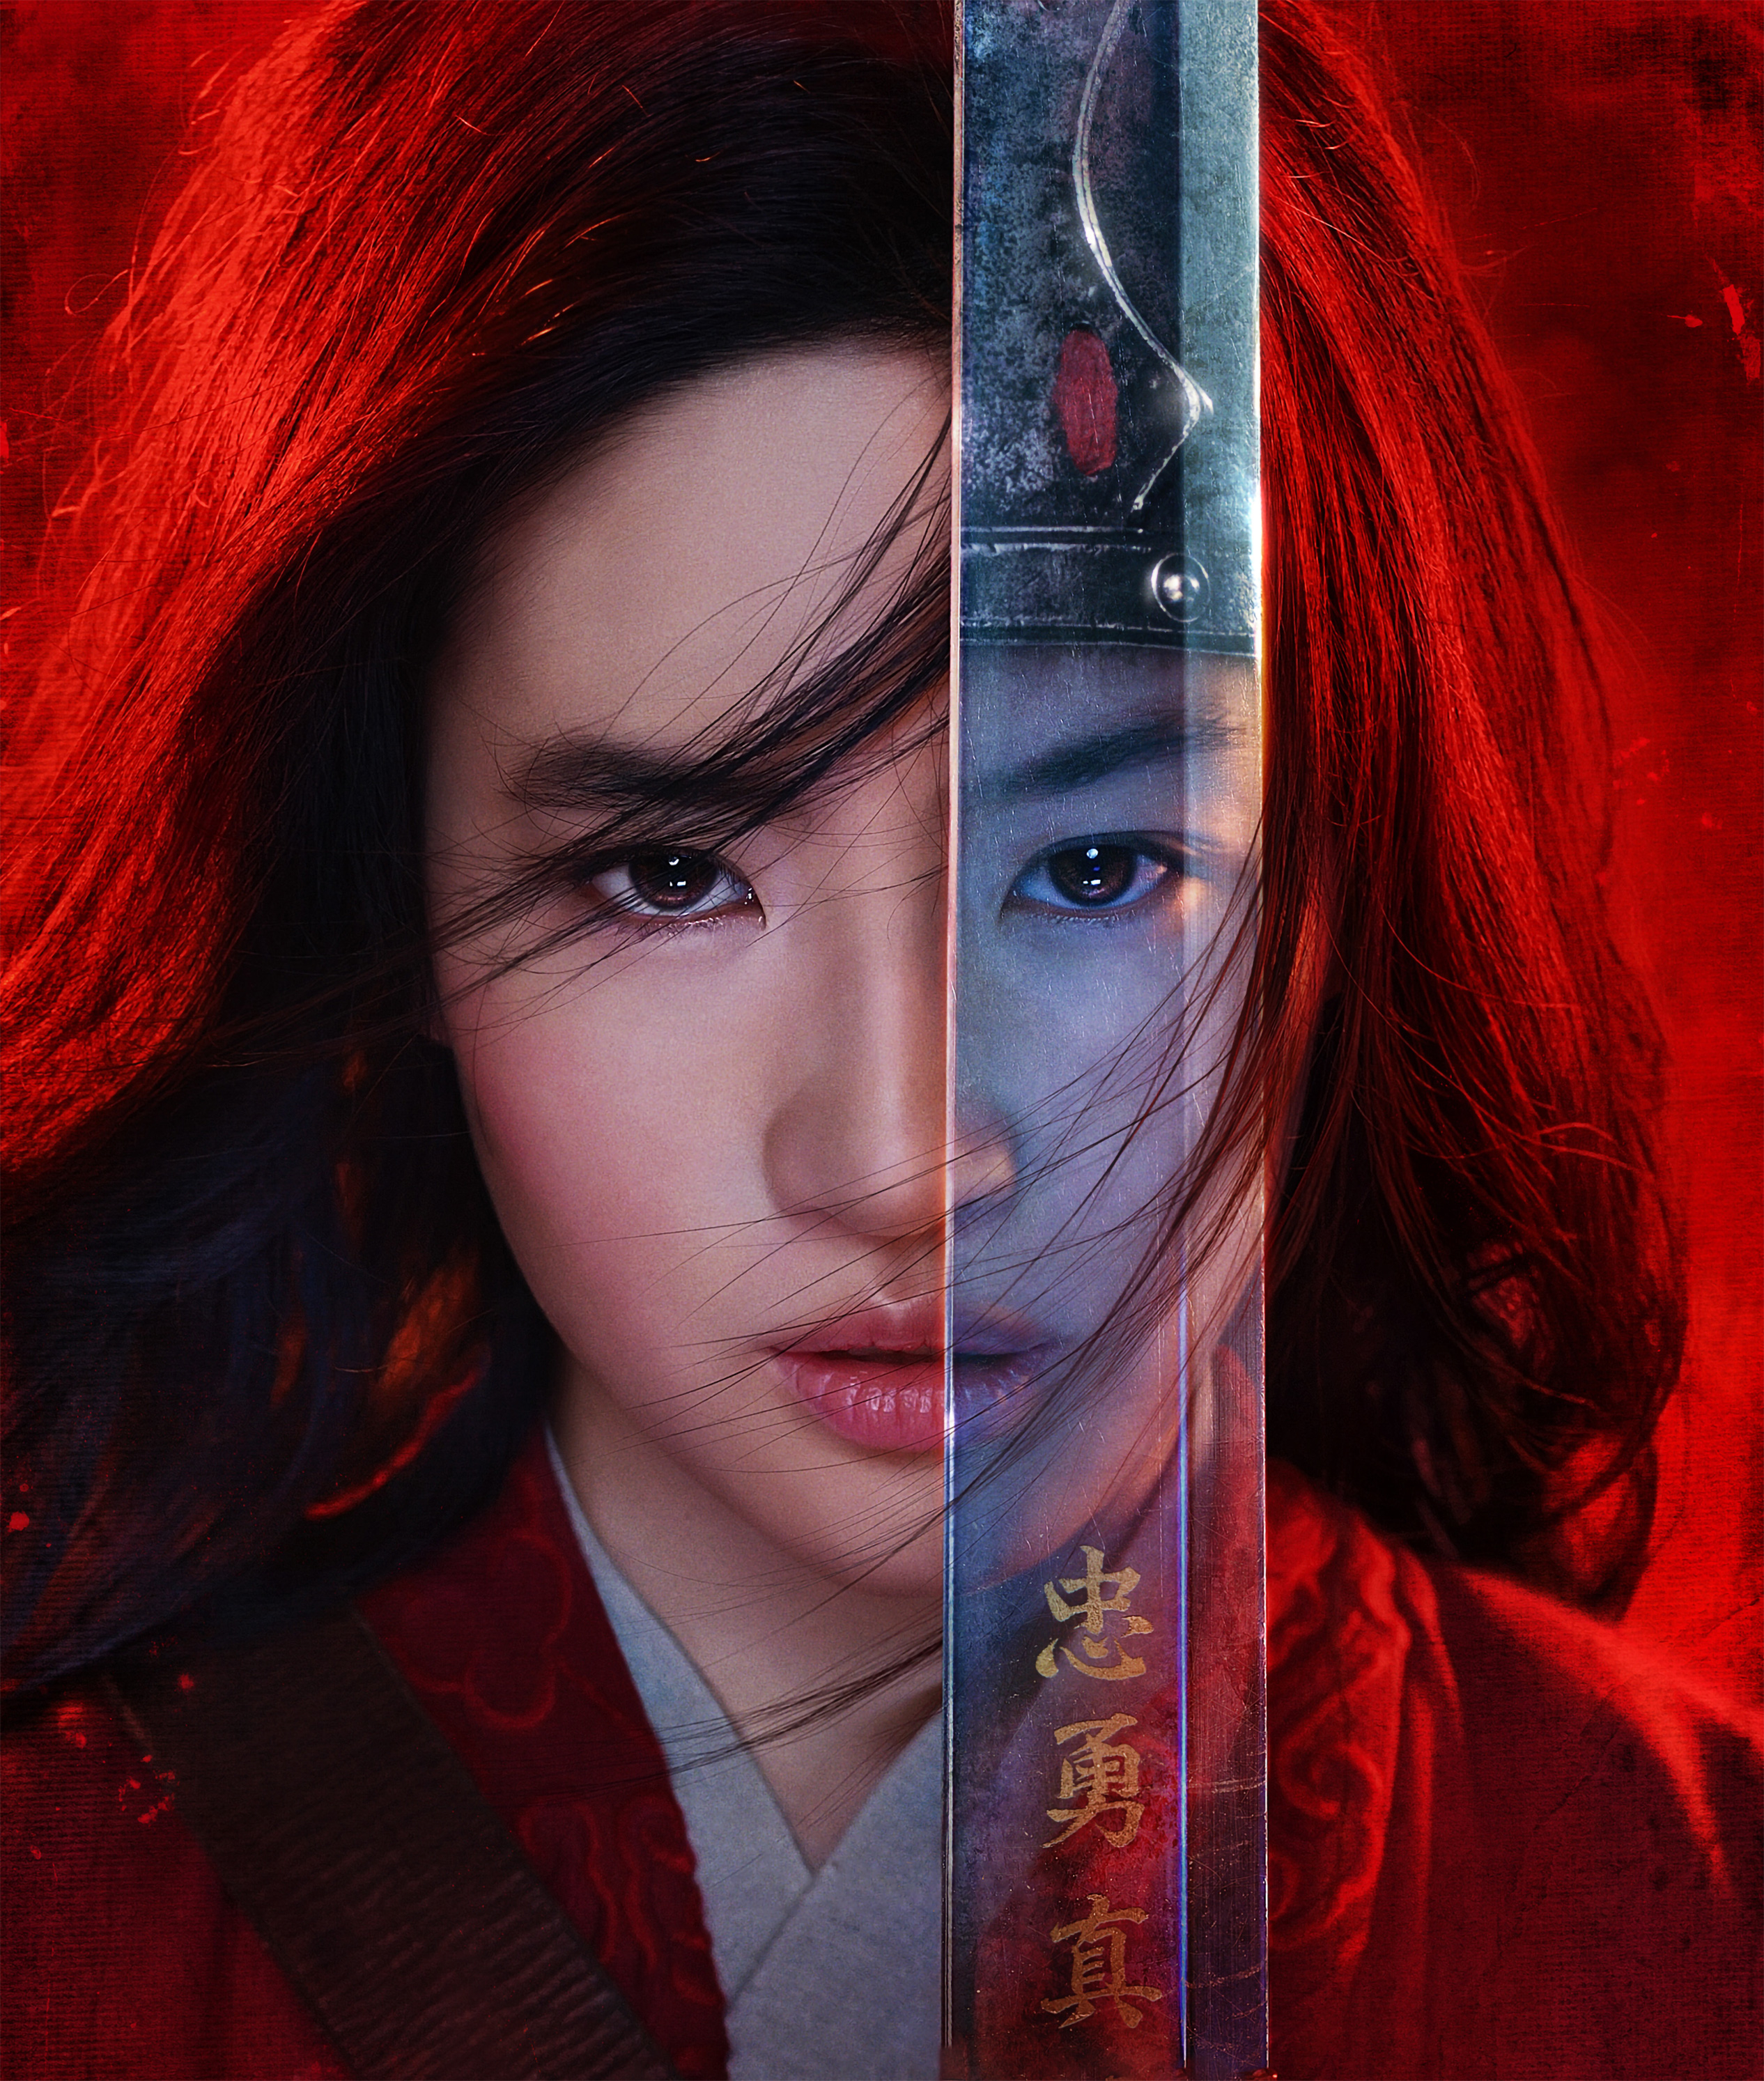 Mulan 2020 Movie Poster Wallpaper, HD Movies 4K Wallpapers ...